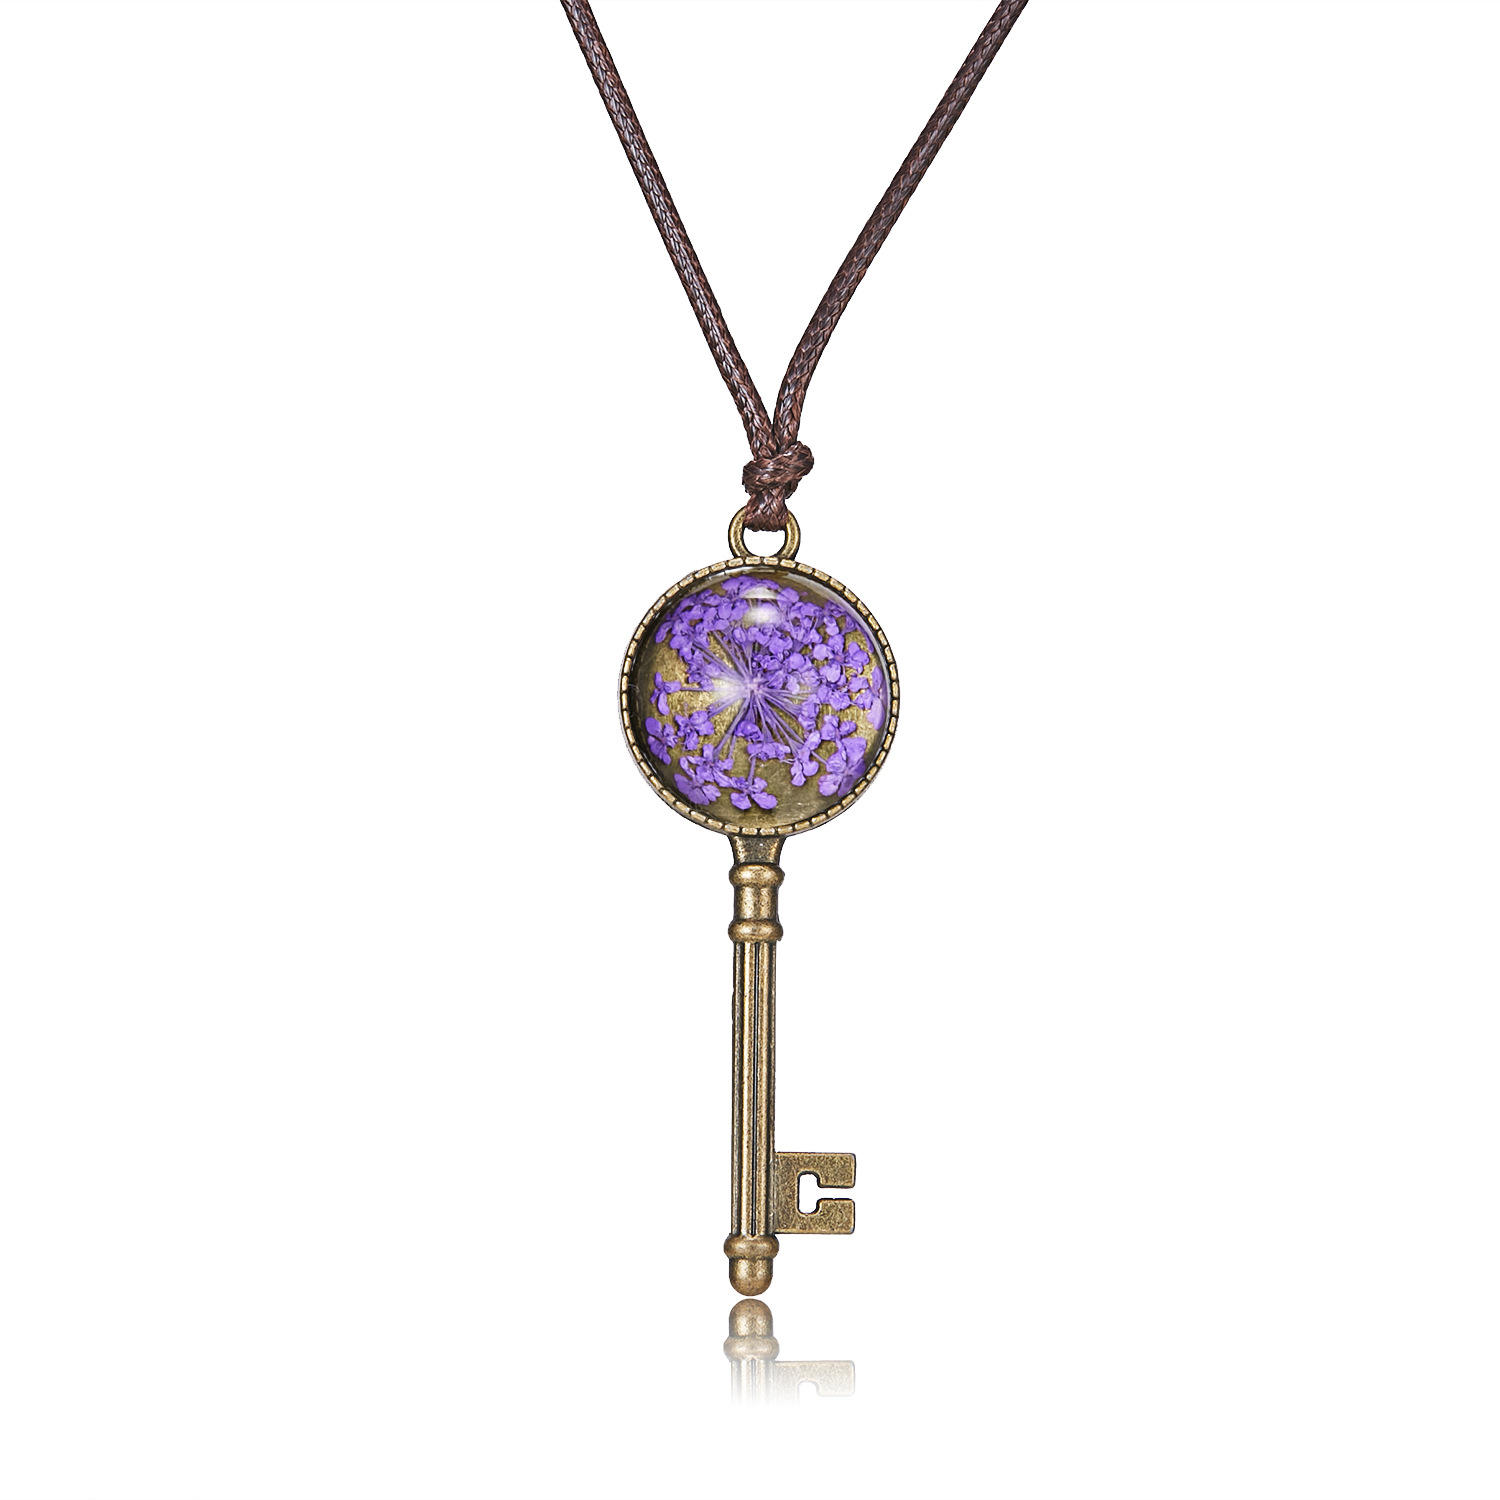 Vintage Gypsophila Metal Key Pendant Necklaces for Women